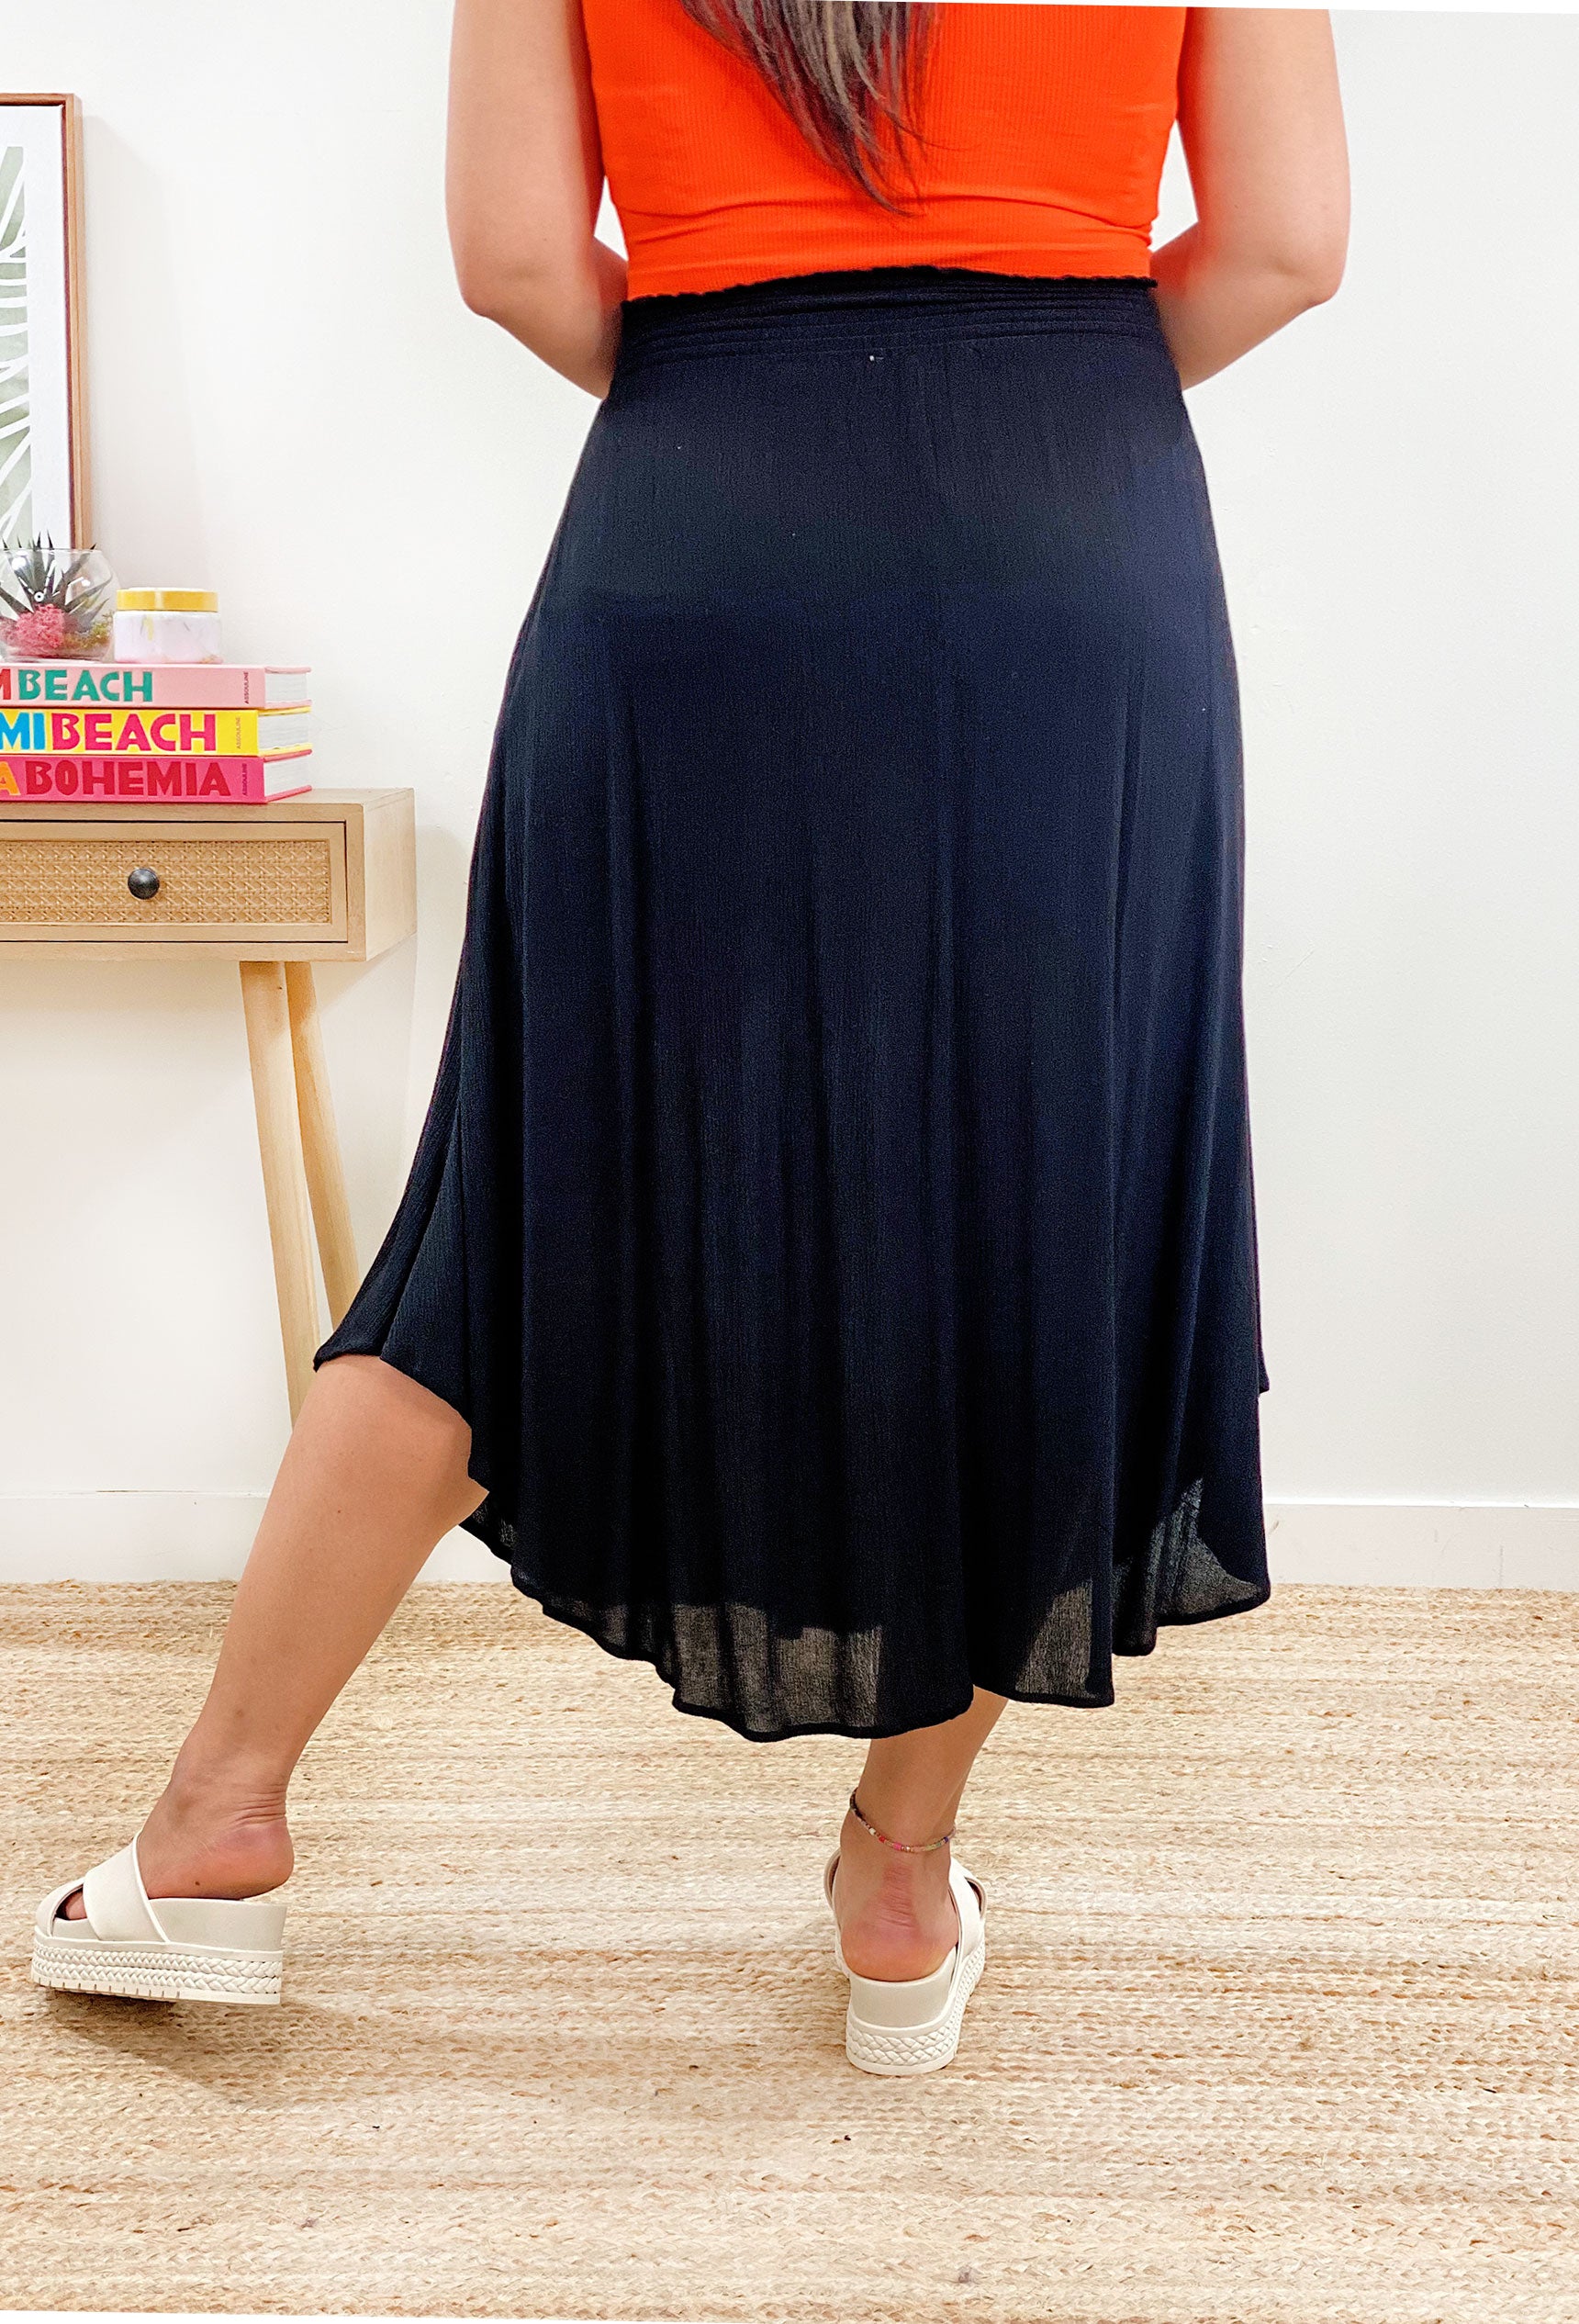 Tori Maxi Skirt in Black, Flowy black skirt featuring a smocked waistband